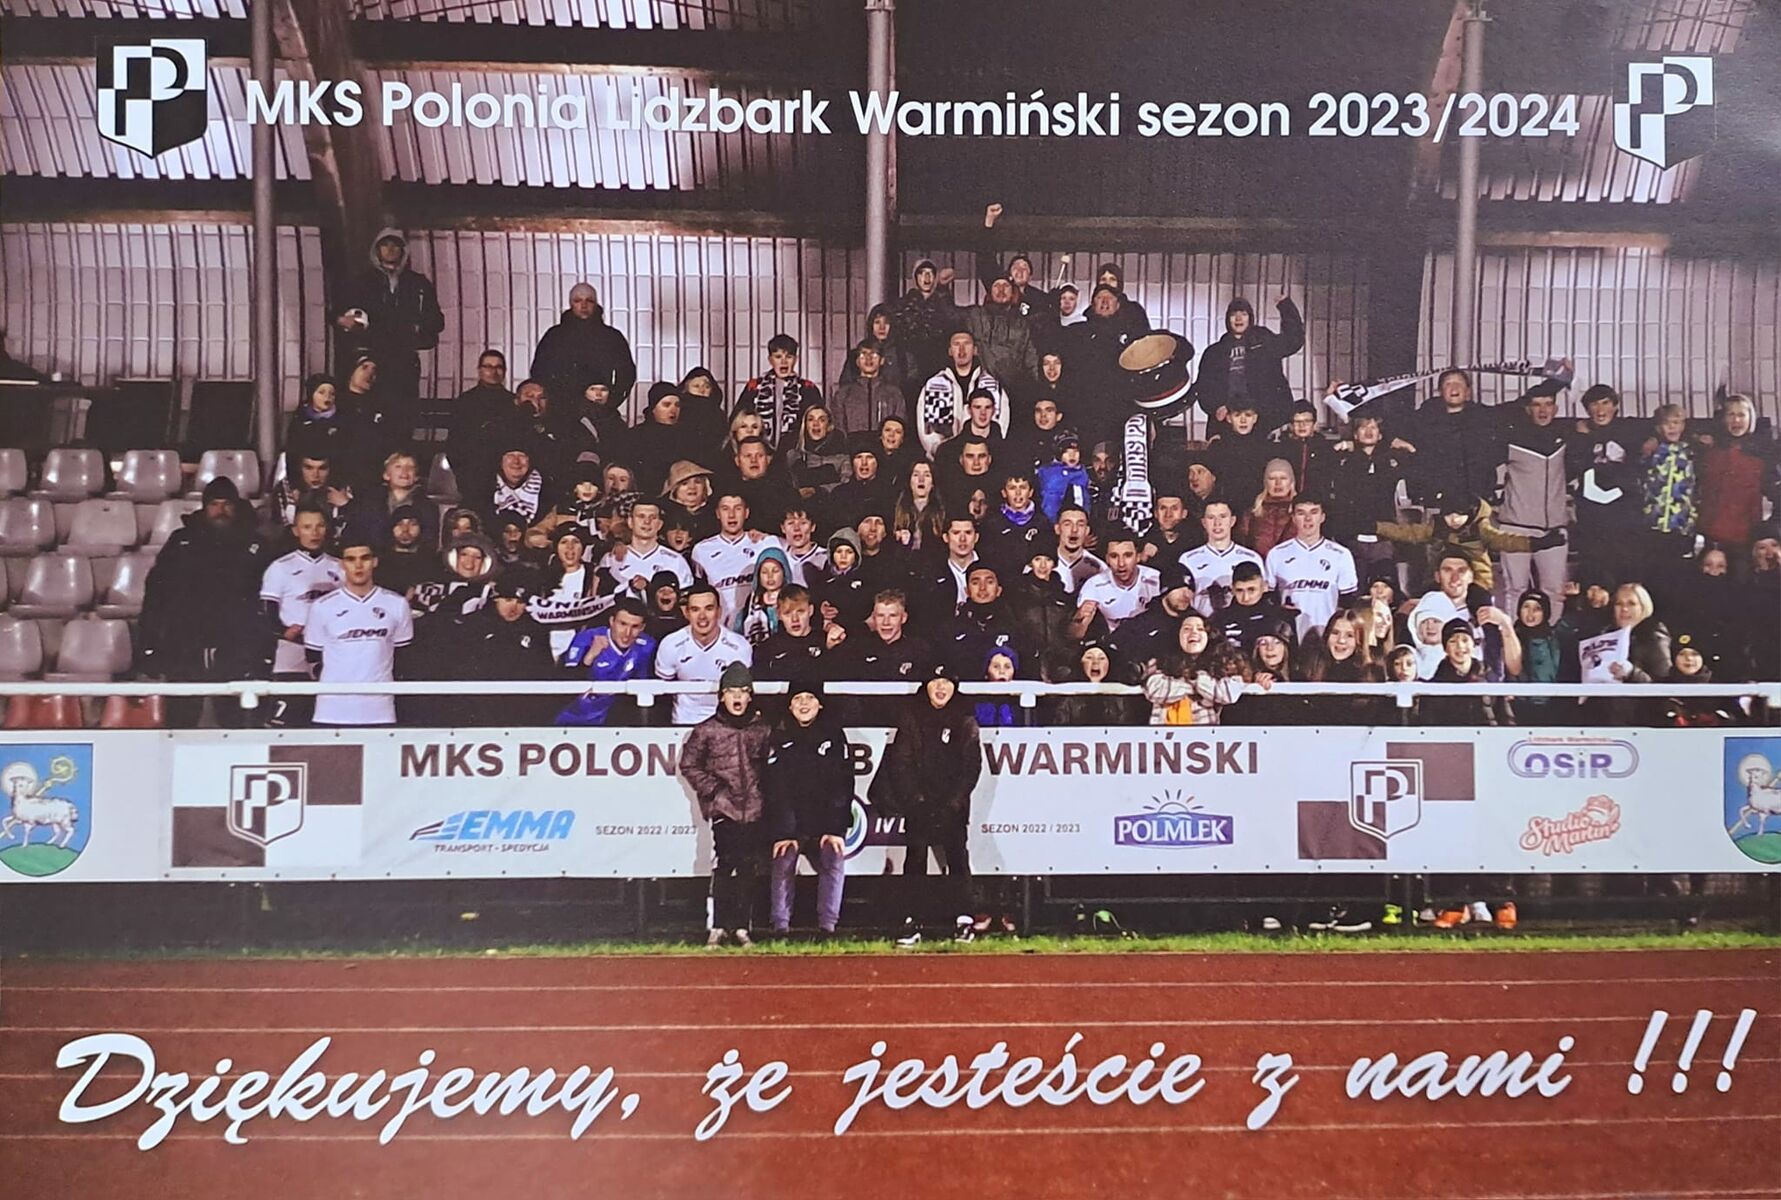 Polonia Lidzbark Warmiński liderem forBET IV ligi. Fot. facebook.com/polonialidzbarkwarminski